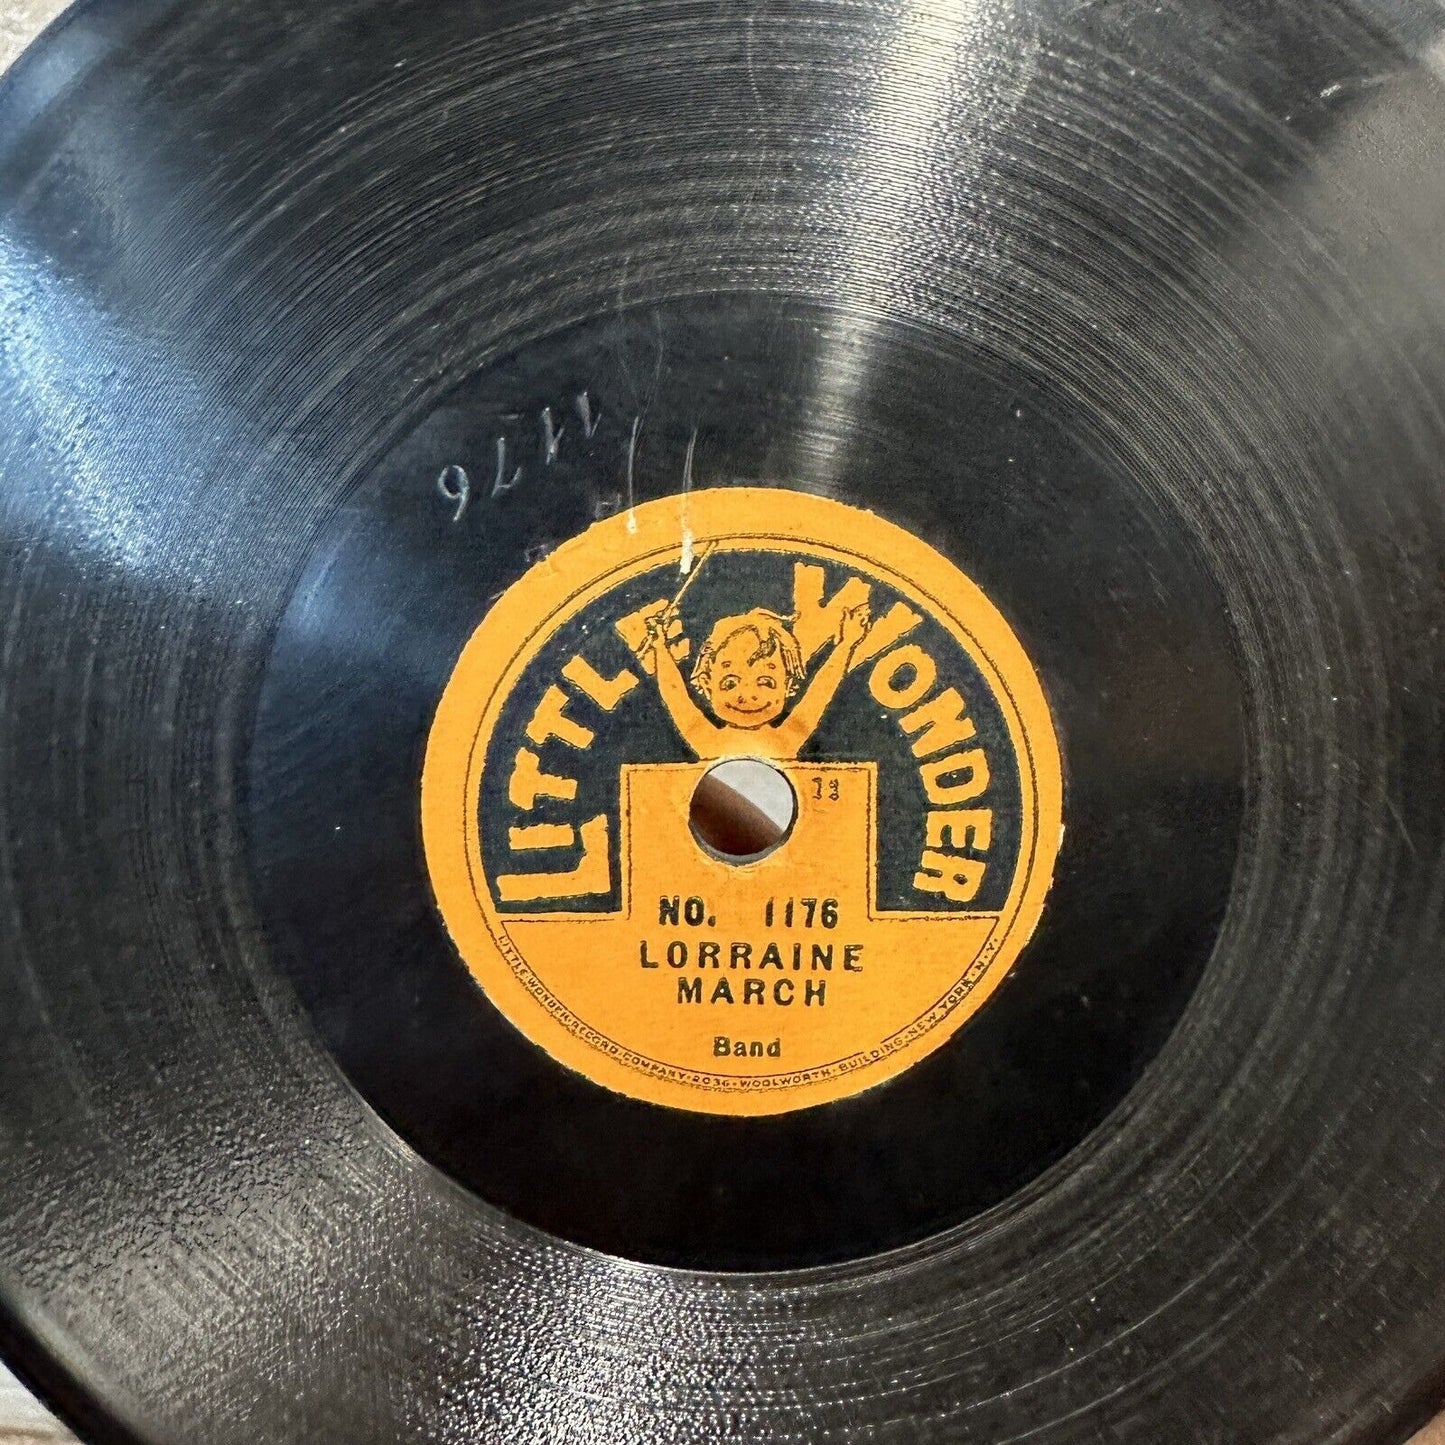 Vintage 1930s Little Wonder No. 1176 Lorrain March Record 78rpm